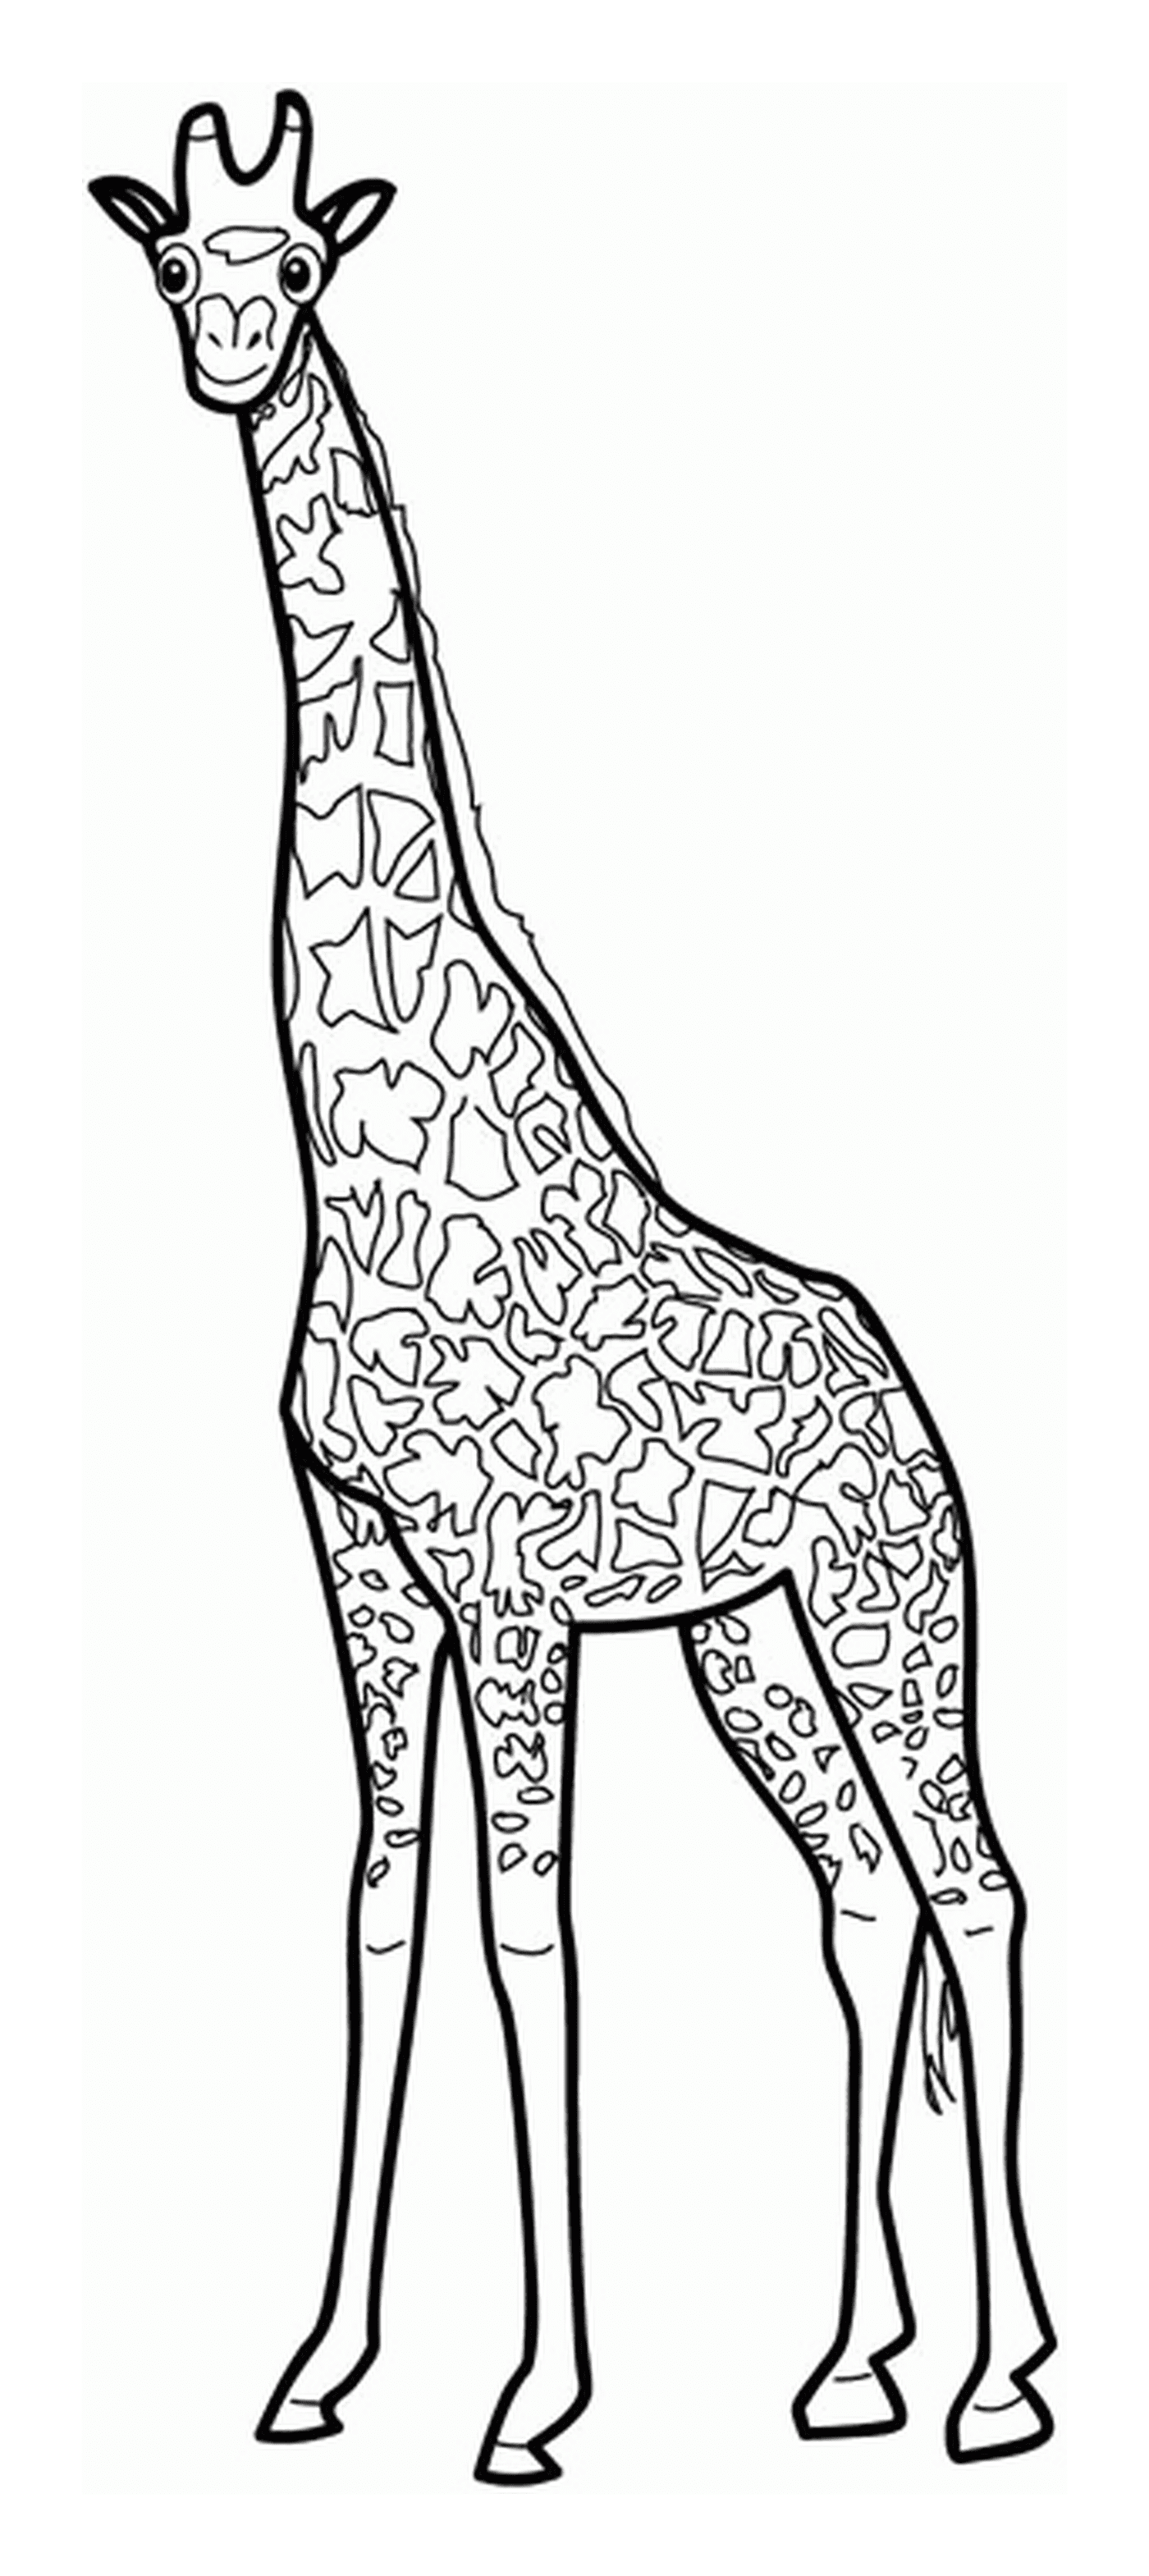  Una giraffa 